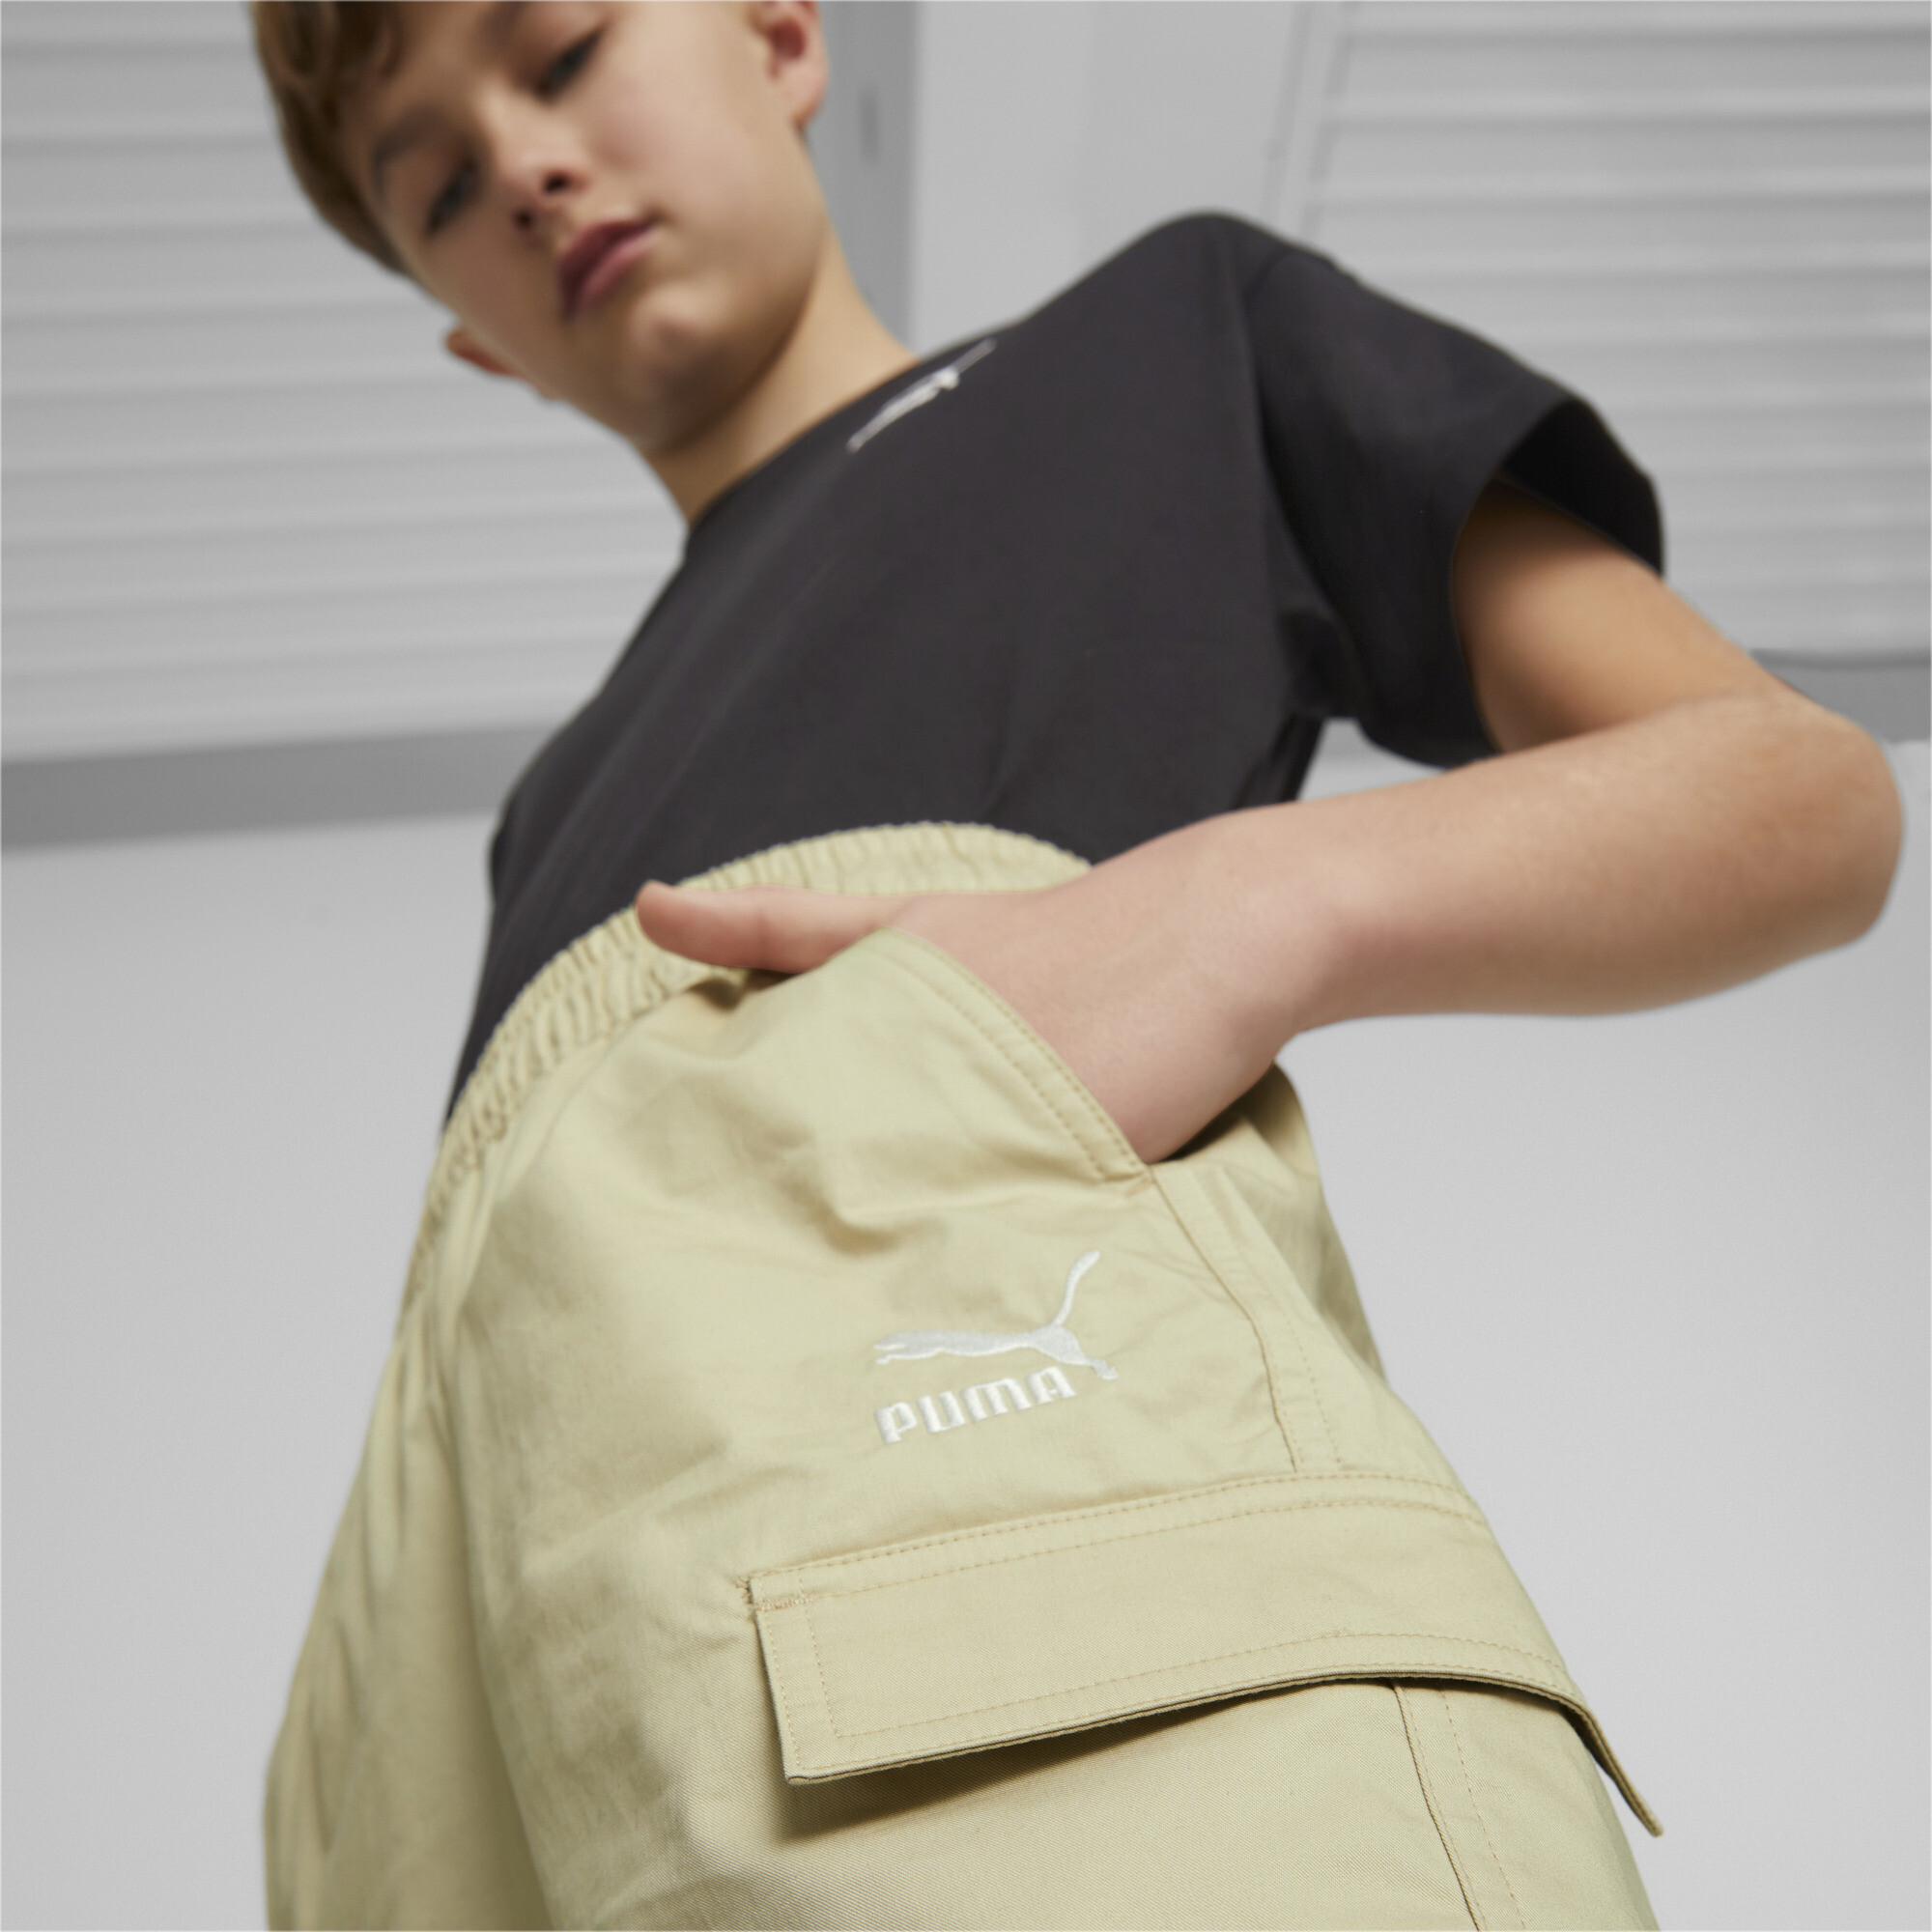 PUMA Classics Woven Sweatpants In Beige, Size 3-4 Youth